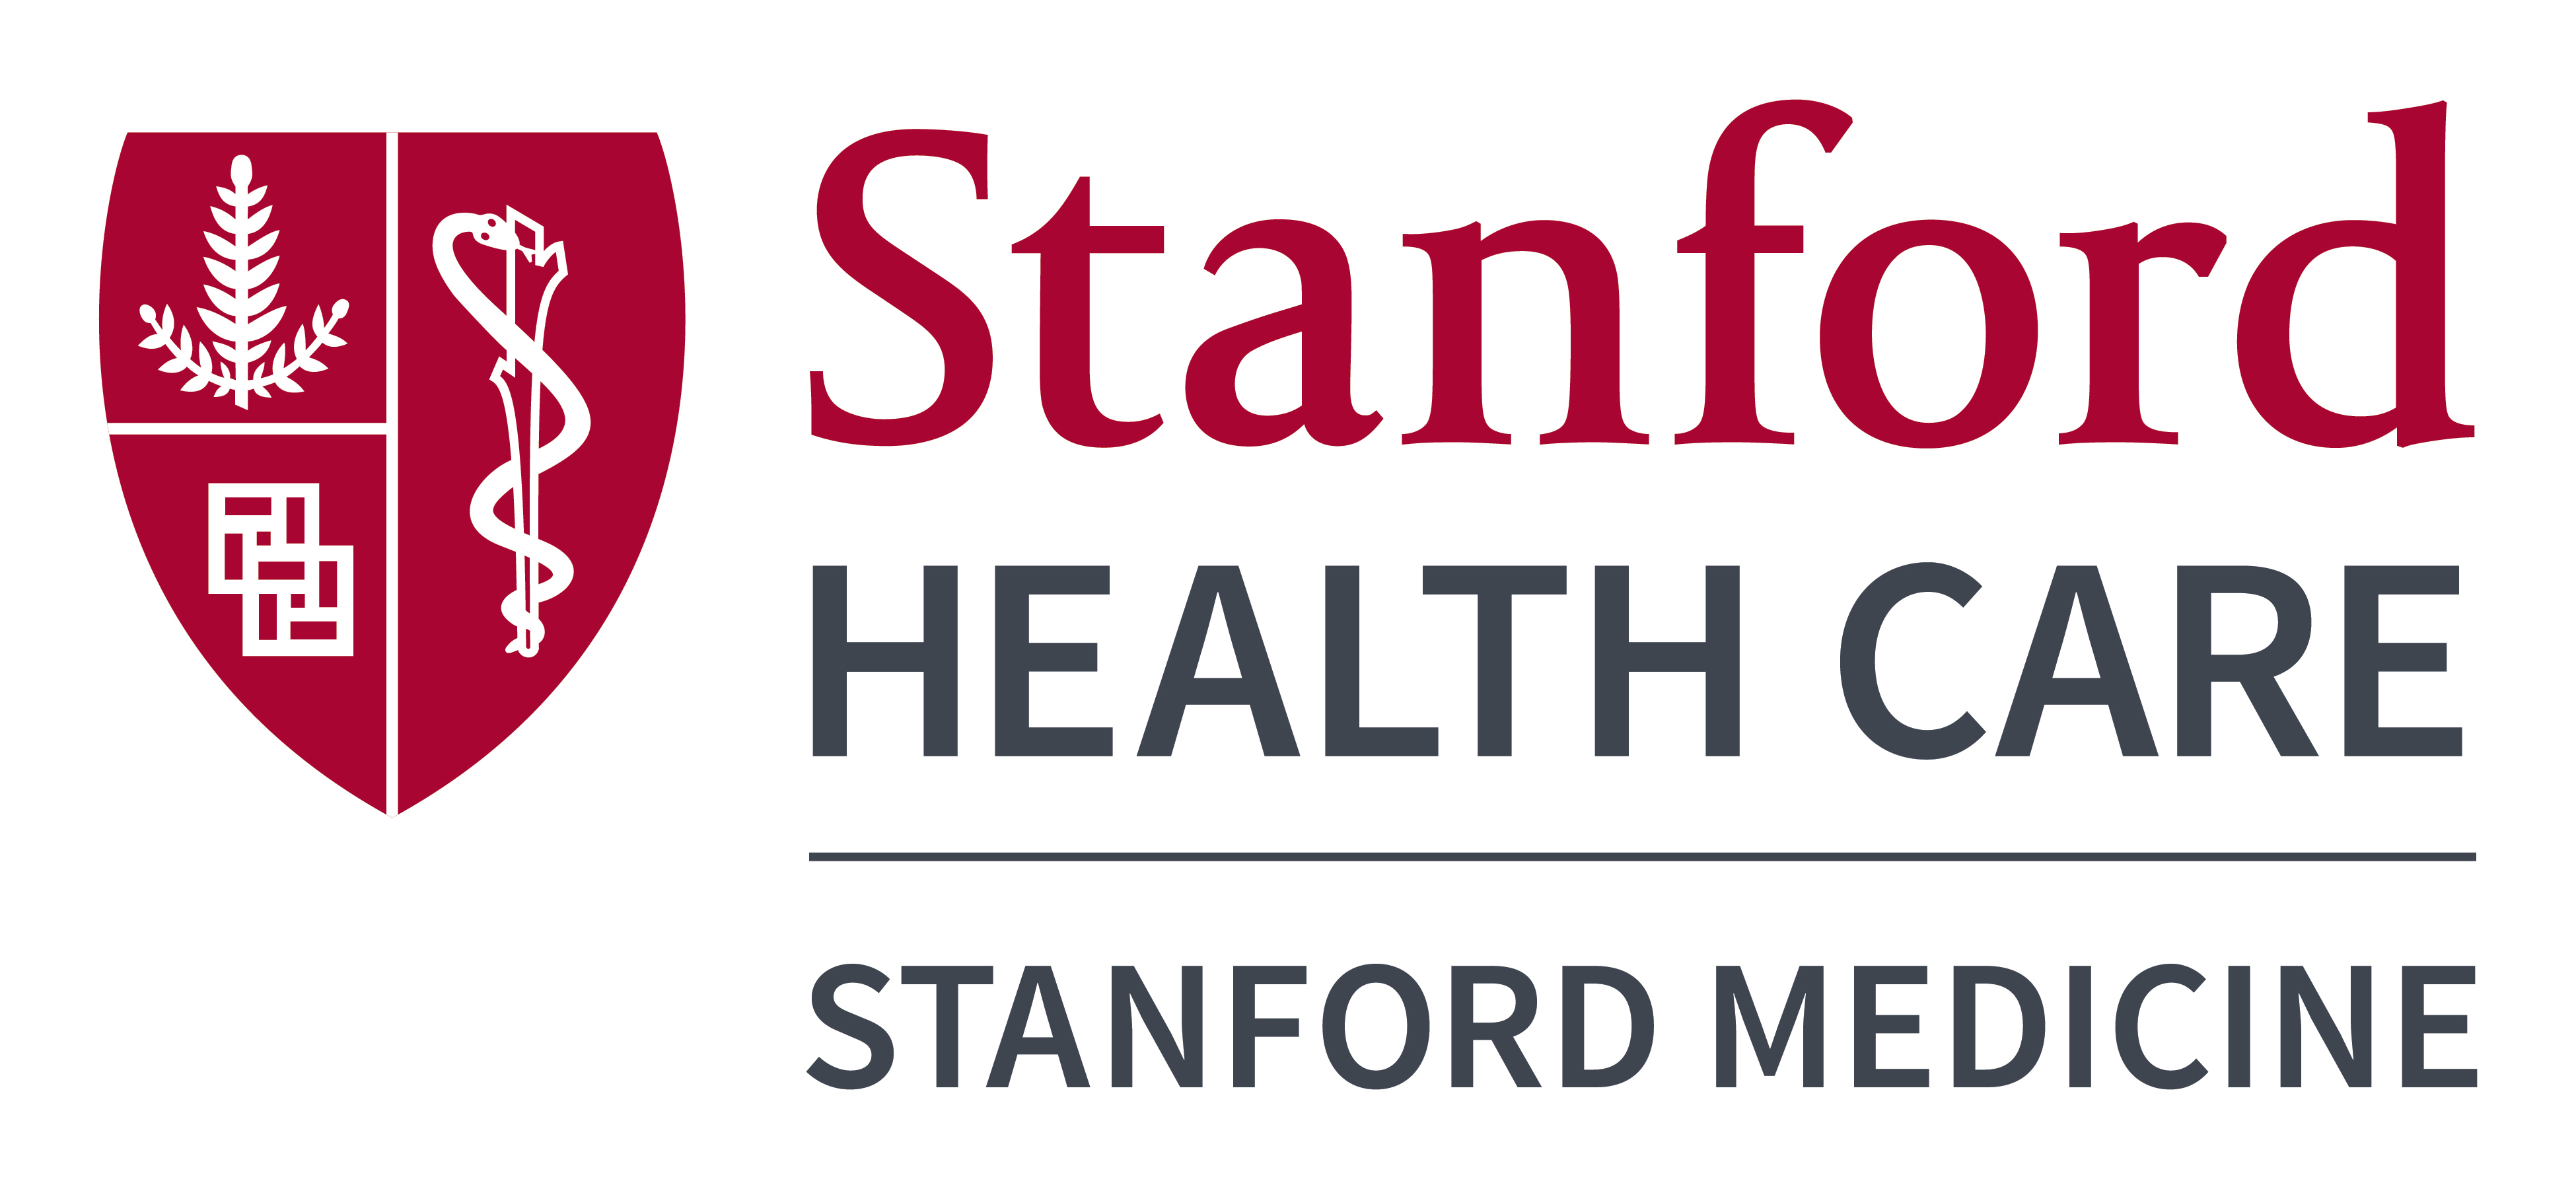 Stanford Medicine Logos